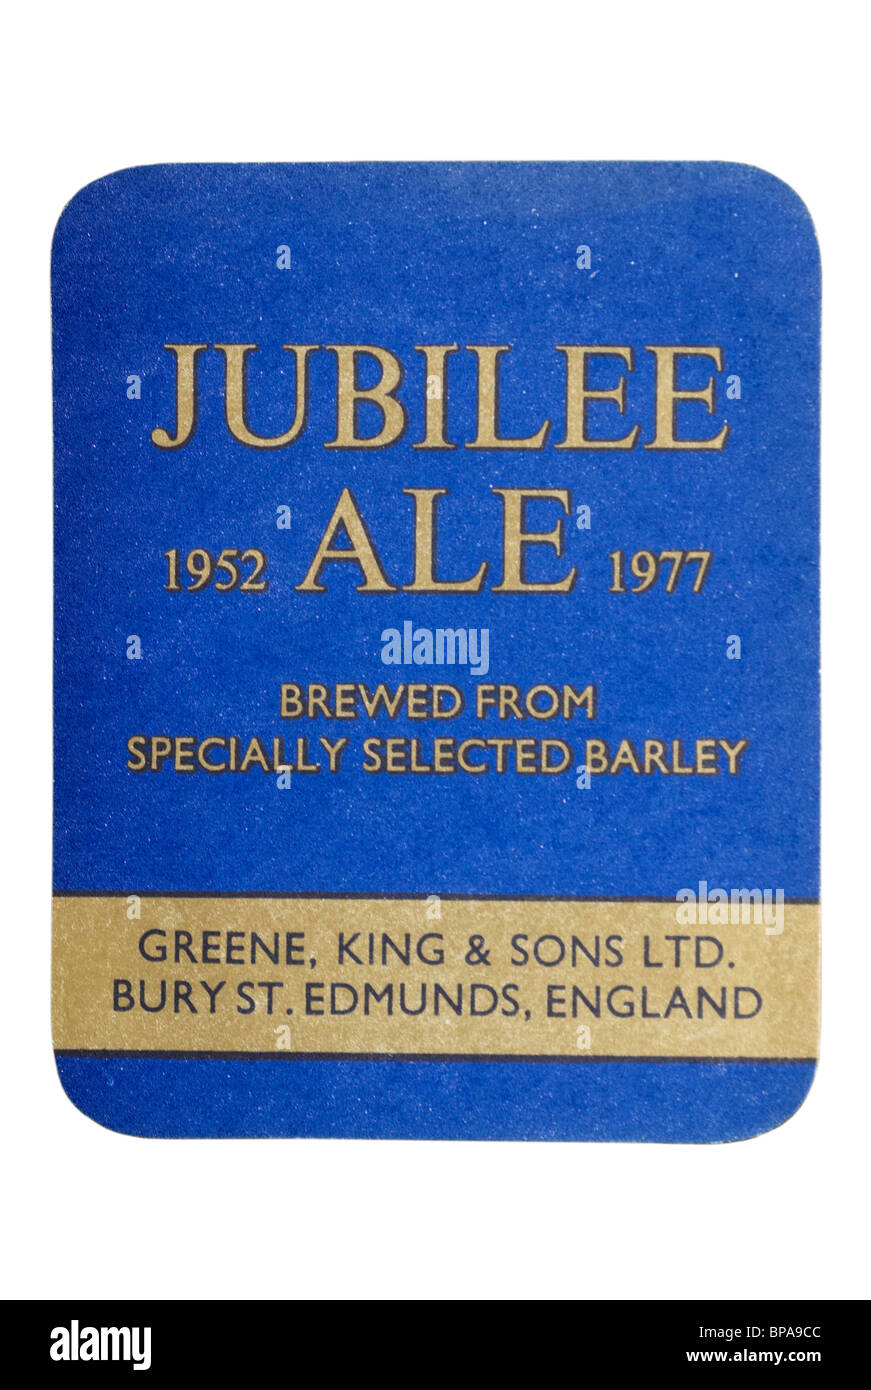 Greene King Jubilee Ale bottle label circa 1977. Stock Photo